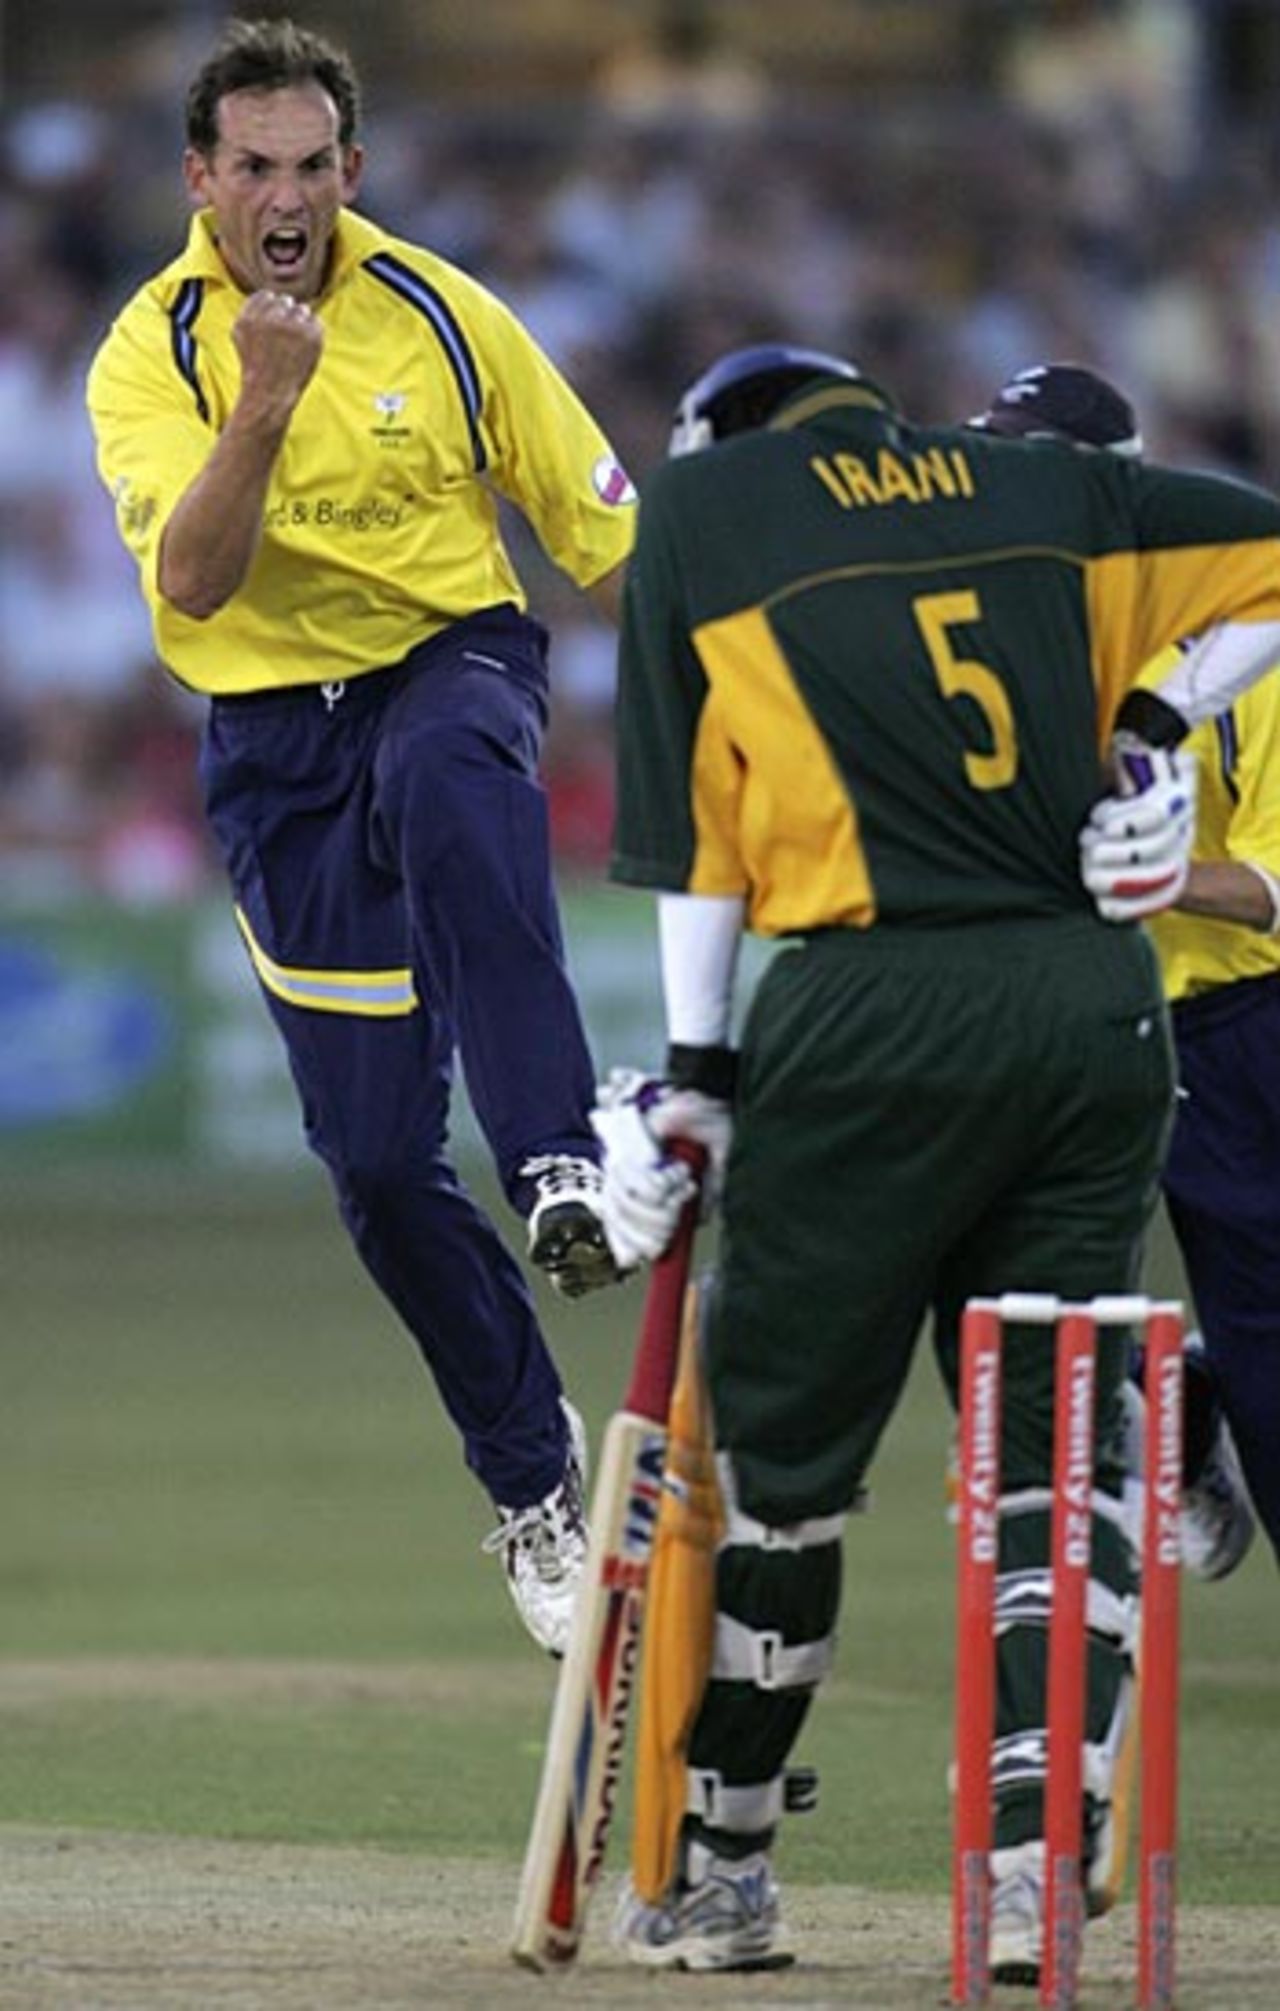 Deon Kruis celebrates the wicket of Ronnie Irani , Essex v Yorkshire, Twenty20 quarter-final, Chelmsford, July 24, 2006